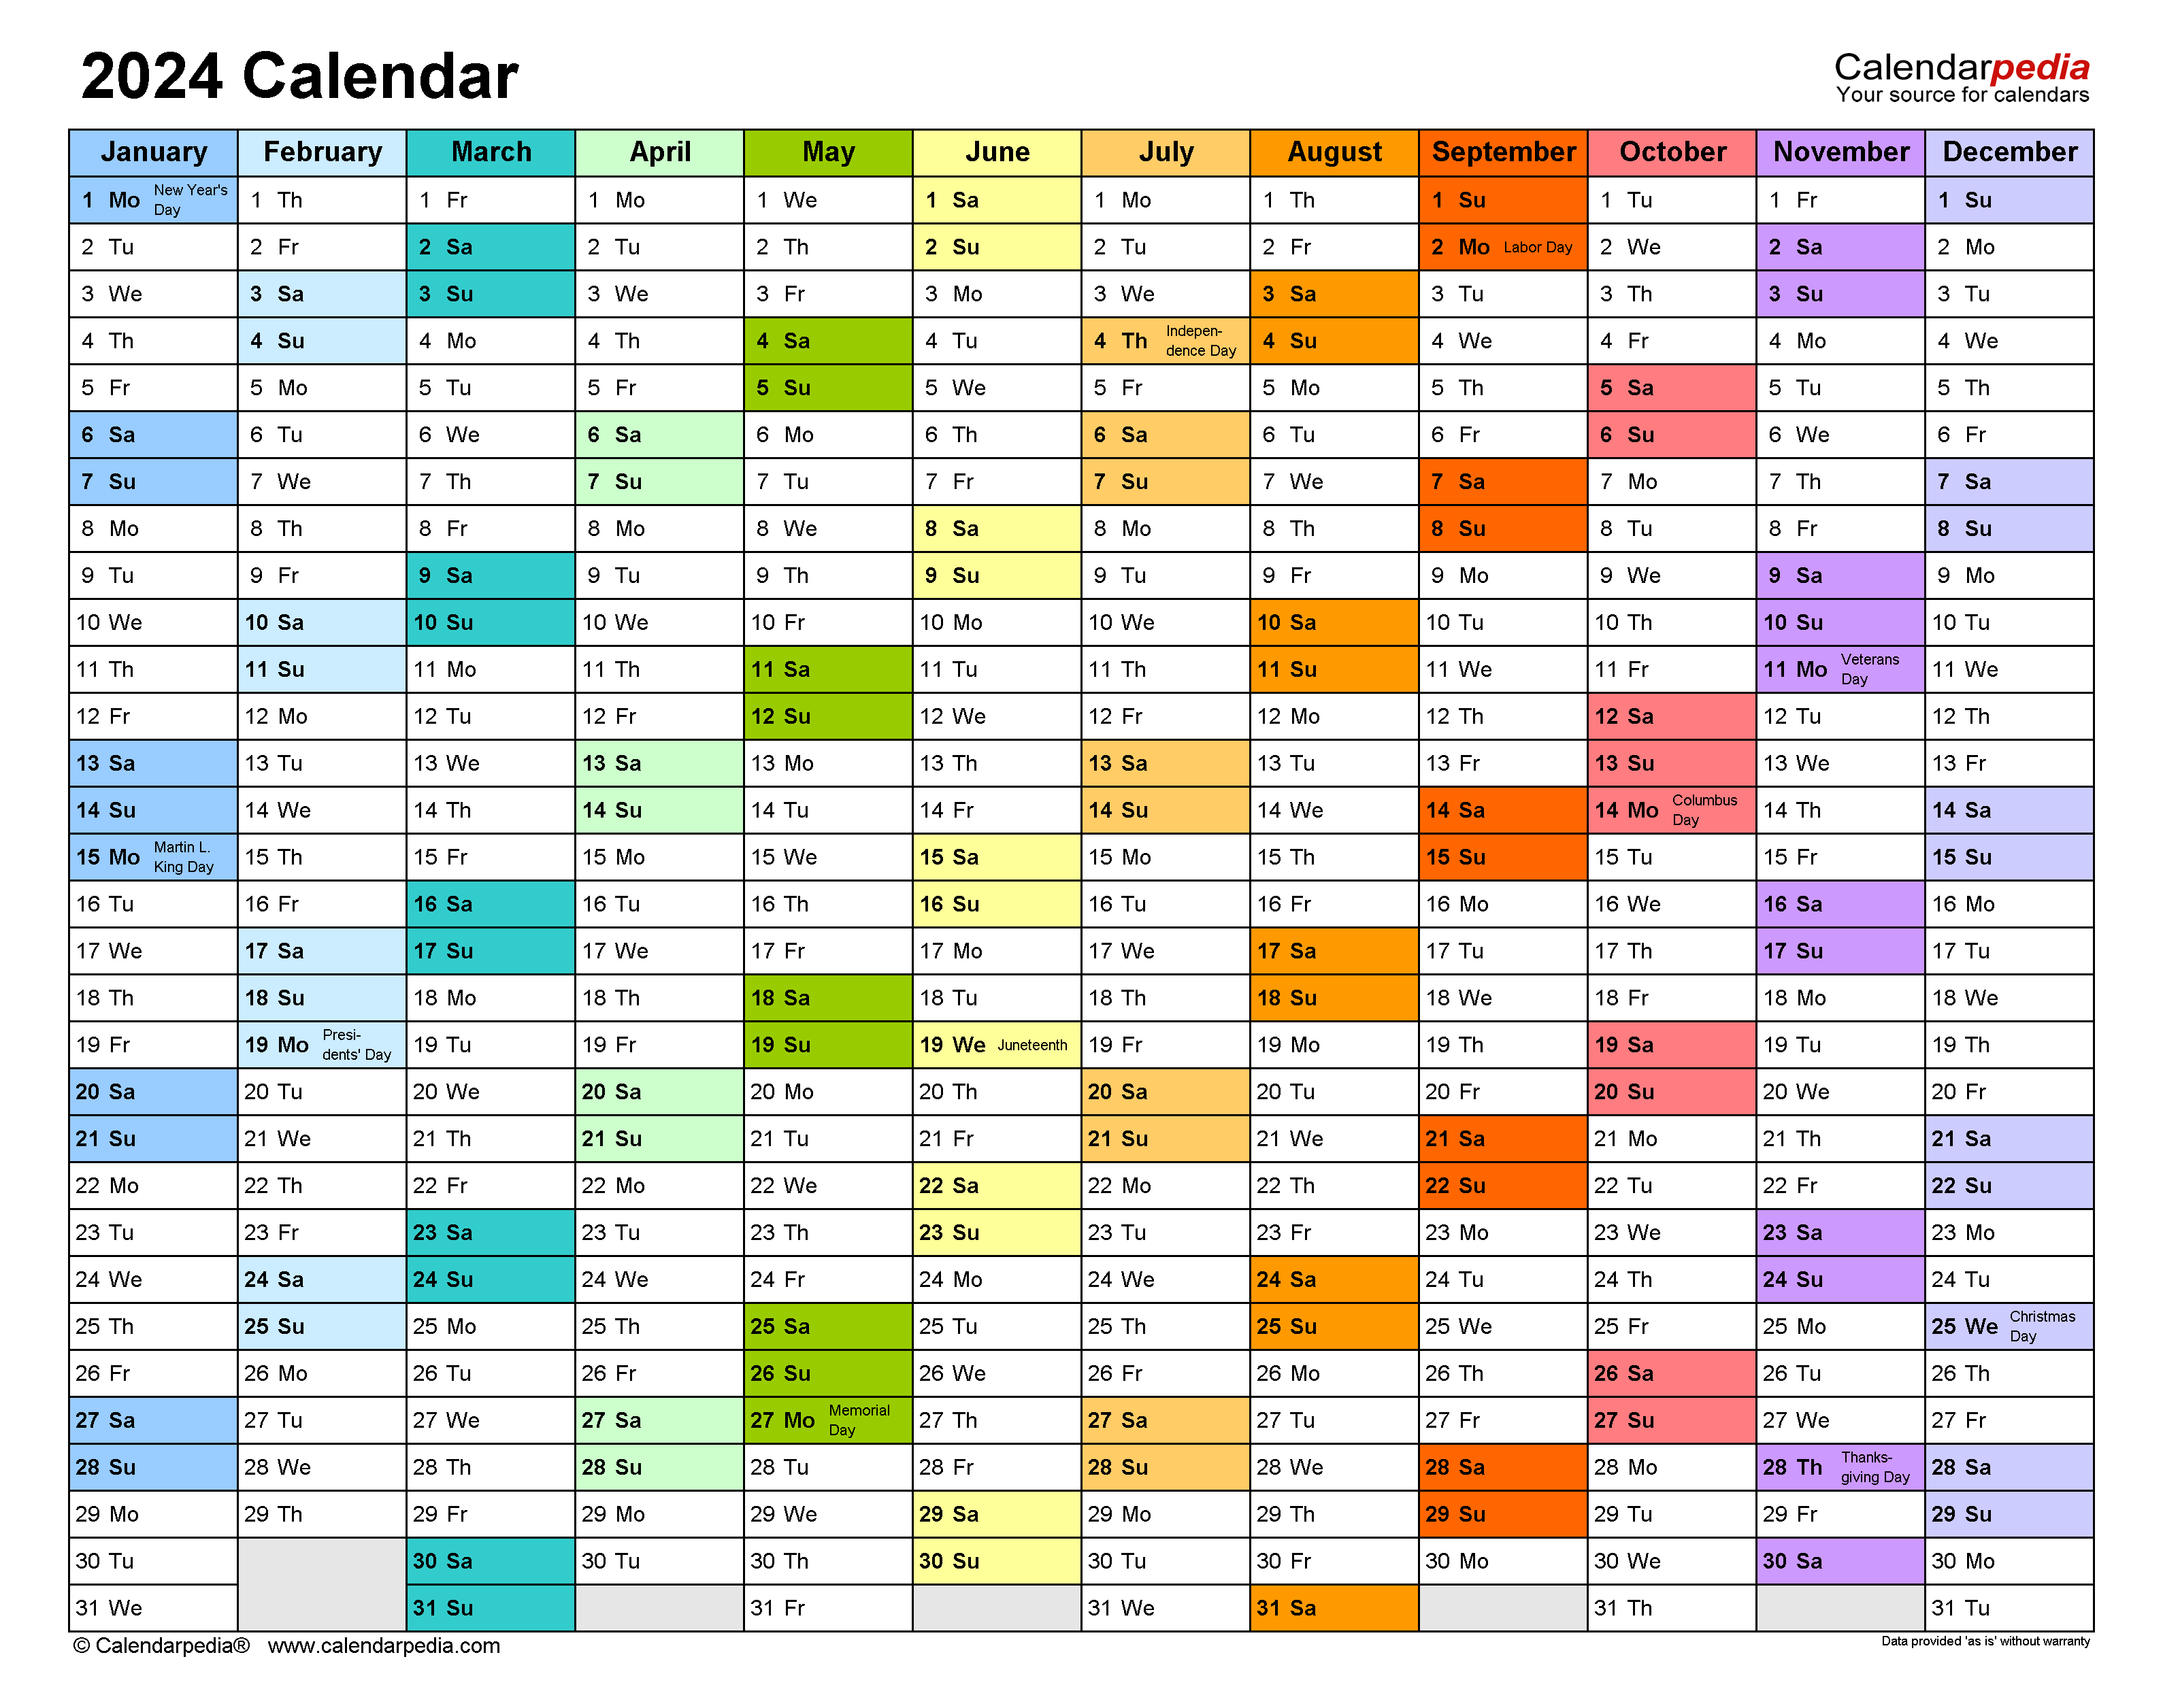 2024 Calendar - Free Printable Word Templates - Calendarpedia for Calendar 2024 Printable Word